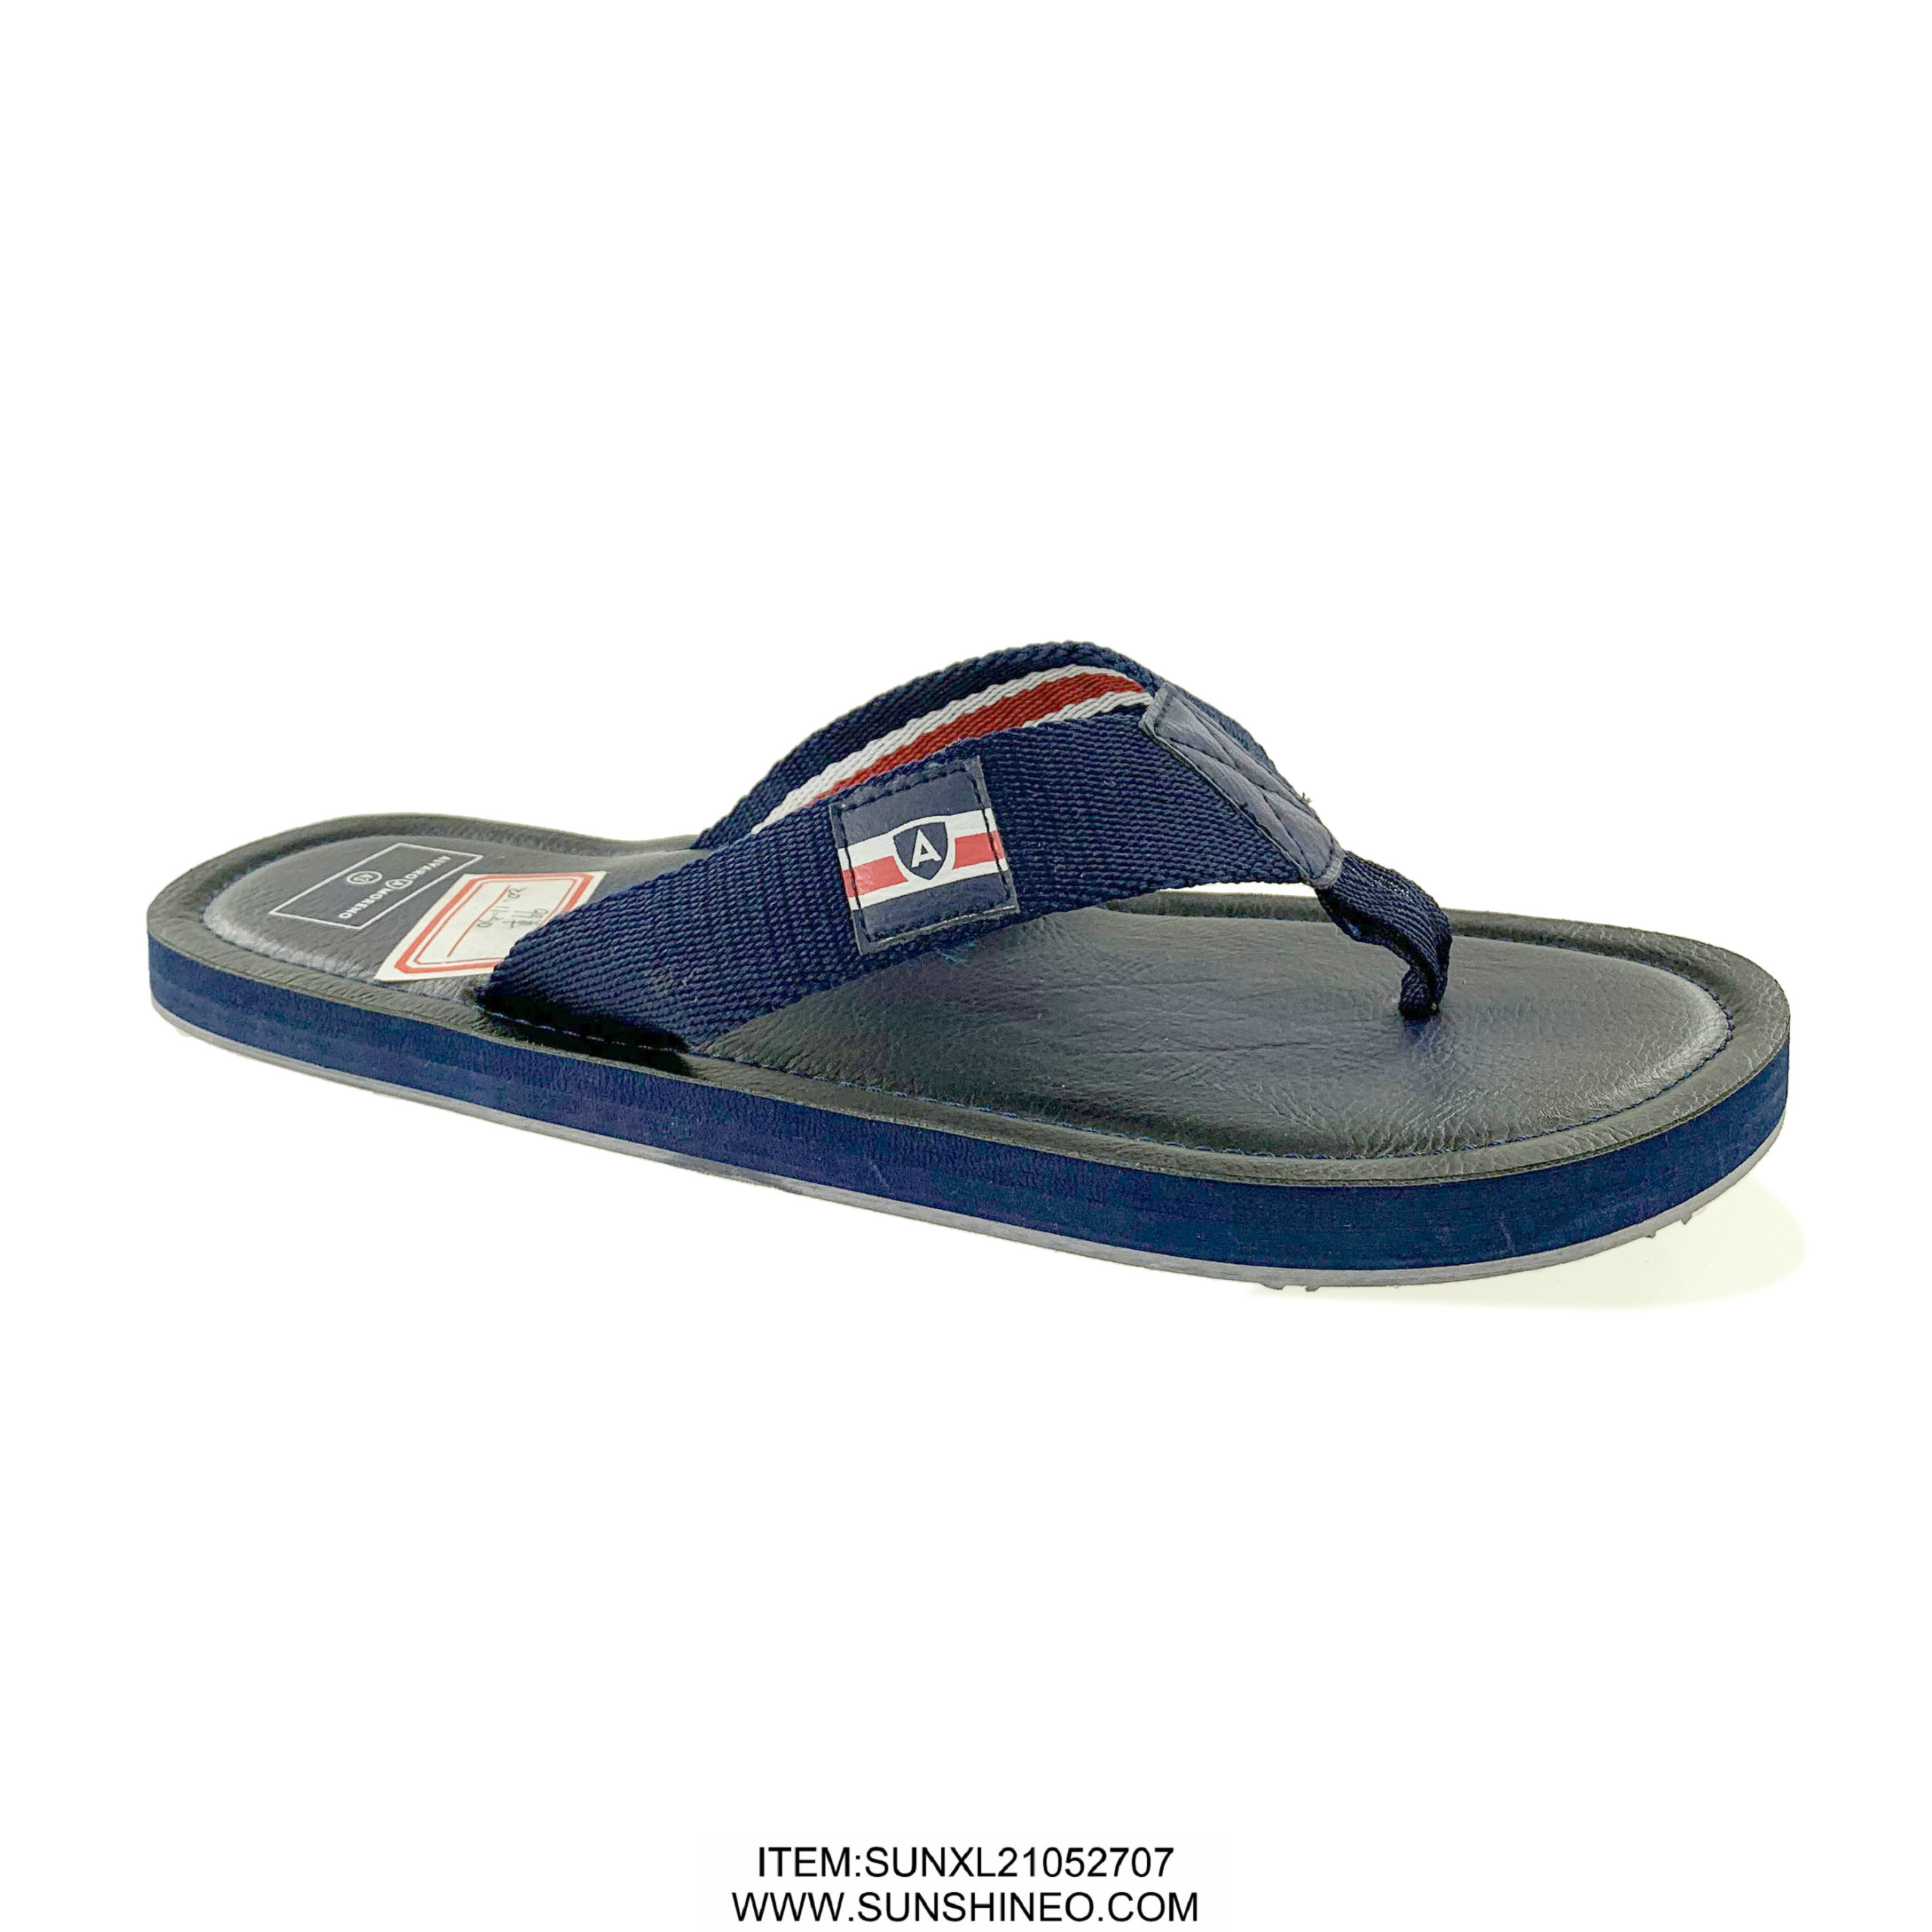 SUNXL21052707 Flip Flop - Sunshineo shoe factory